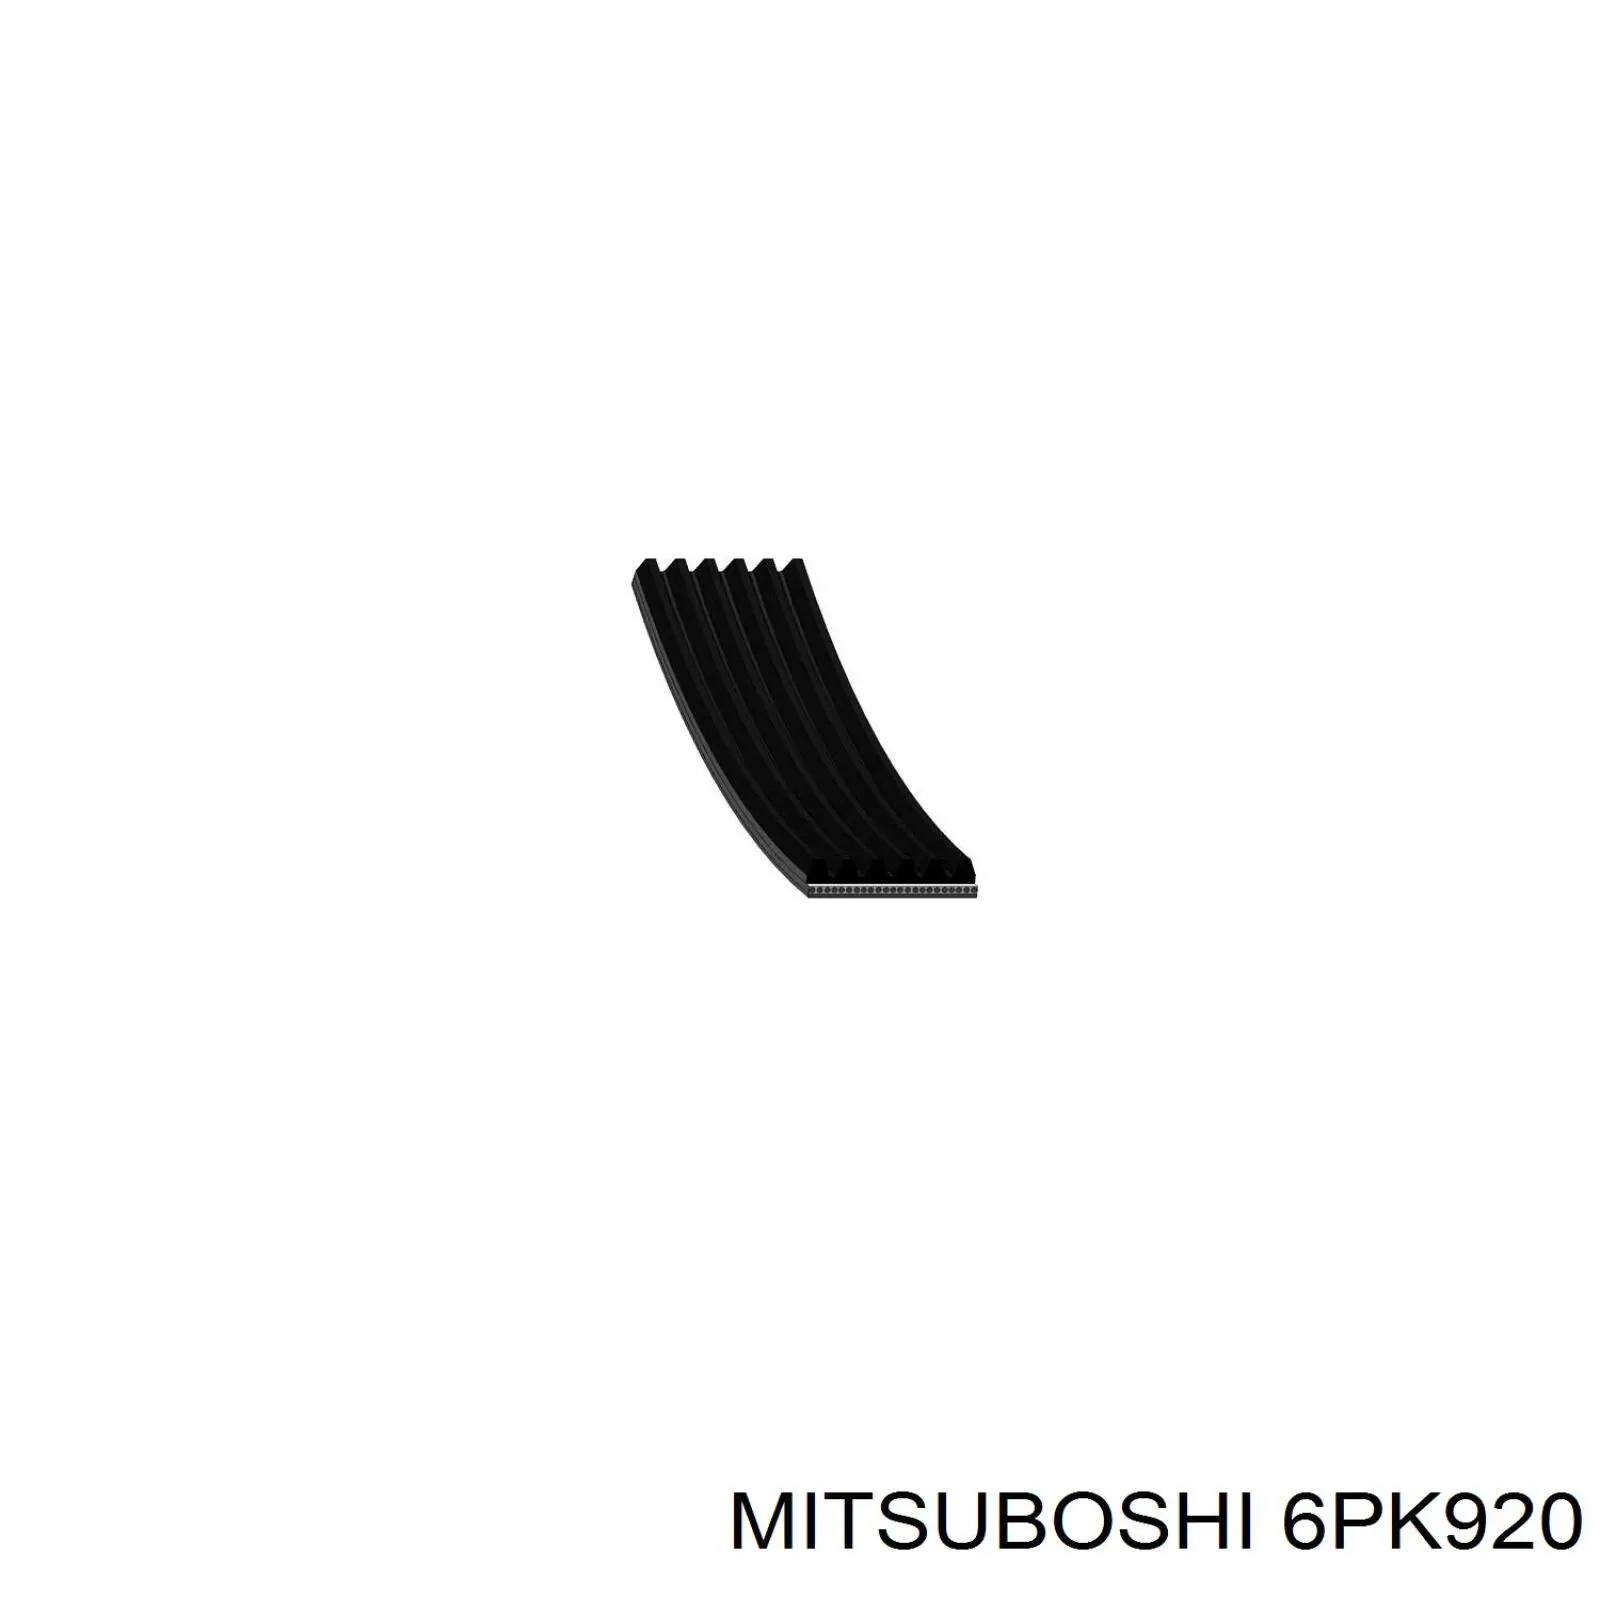 6PK920 Mitsuboshi ремень генератора